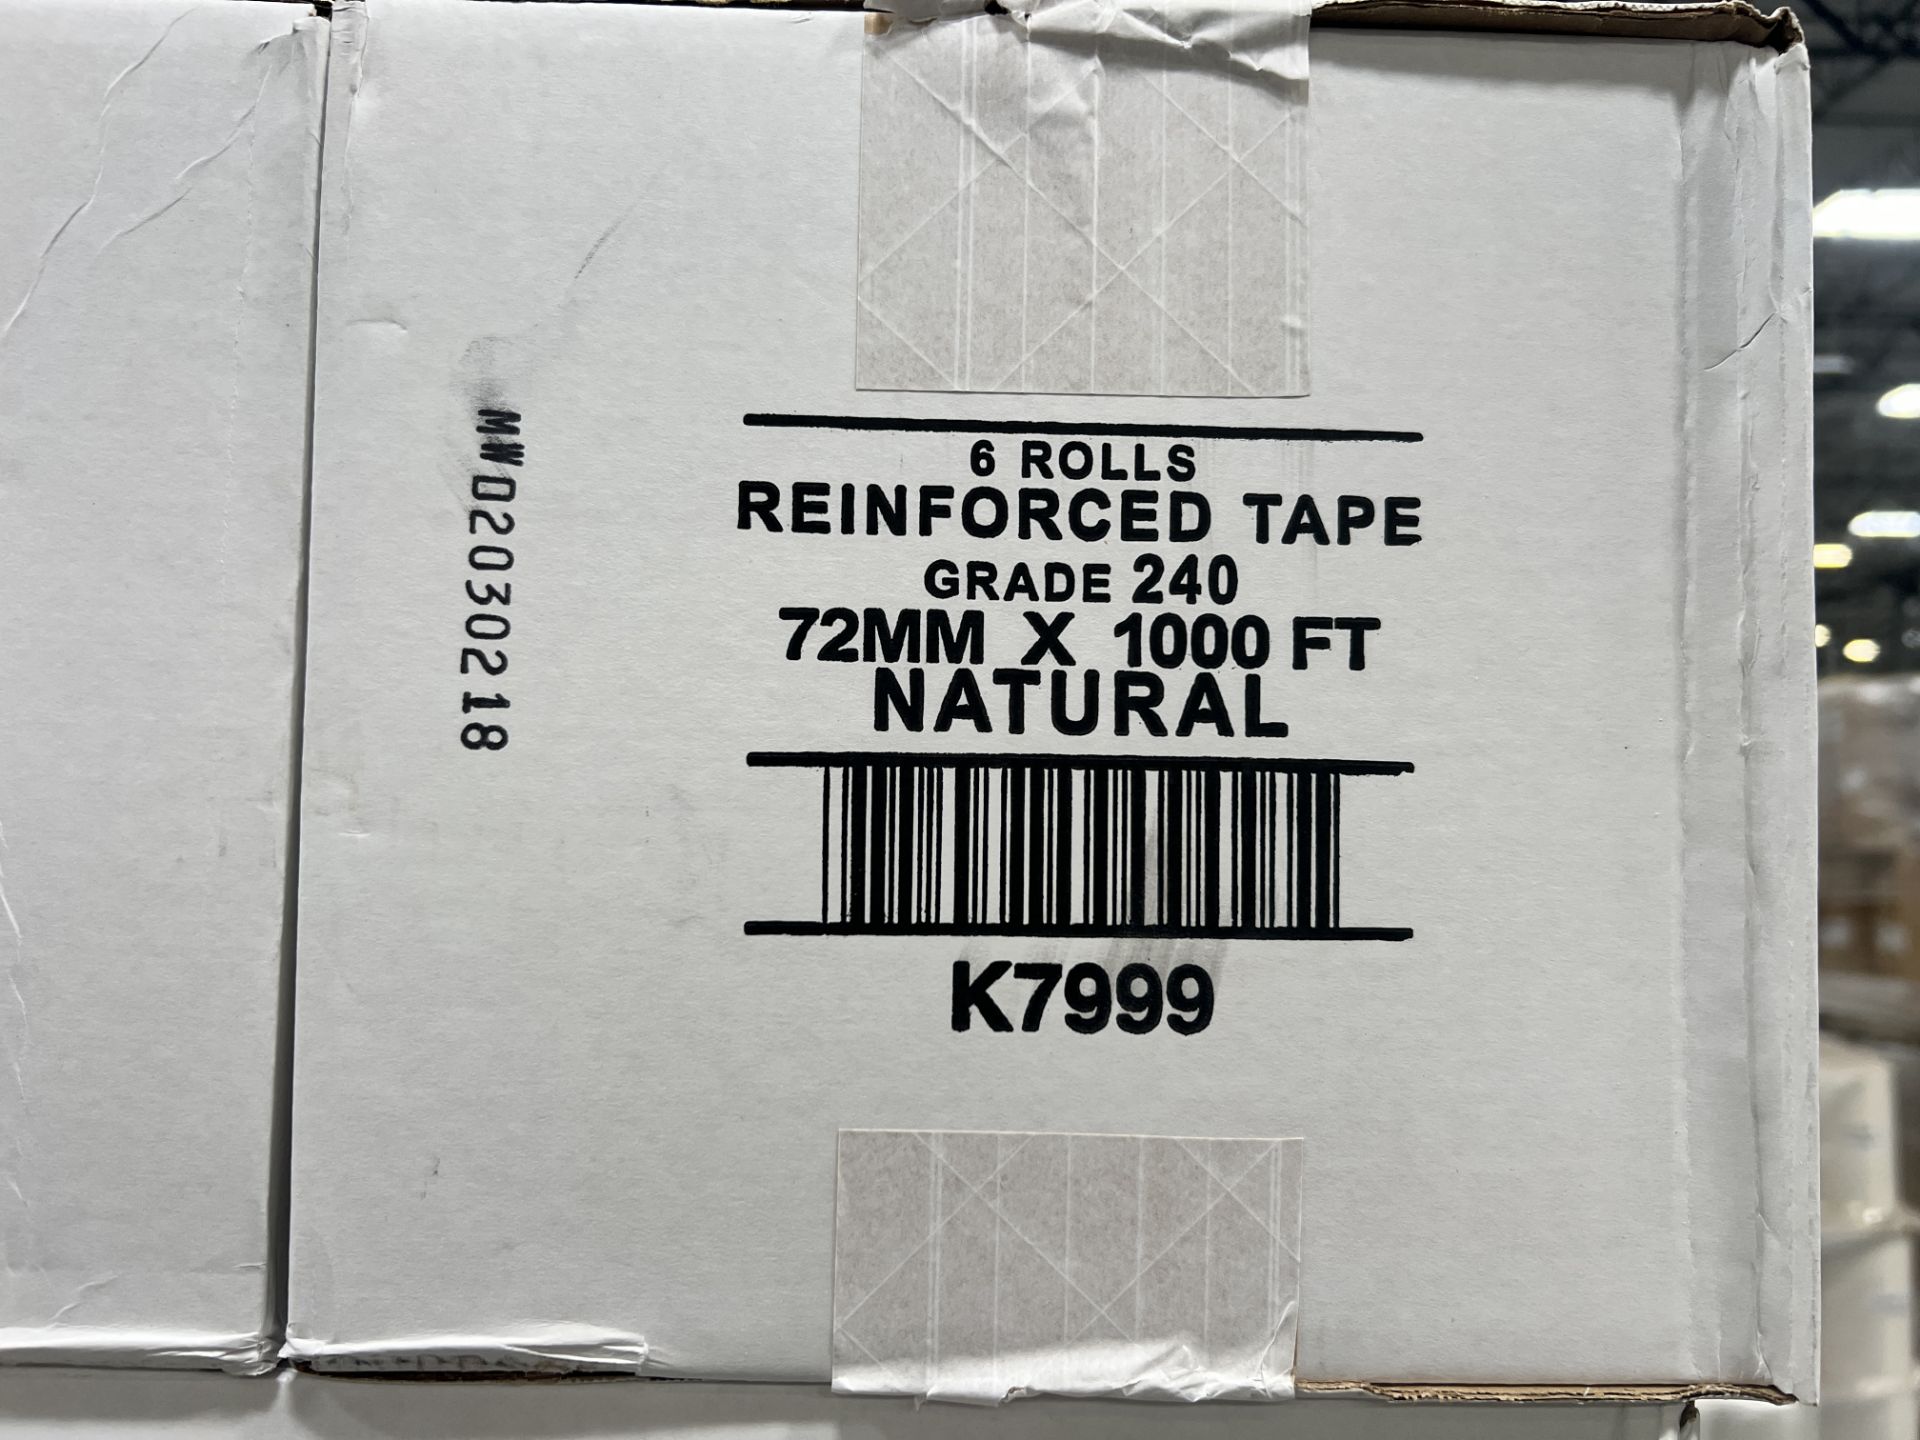 Reinforced Tape Grade 240 1000' Natural - Image 2 of 7